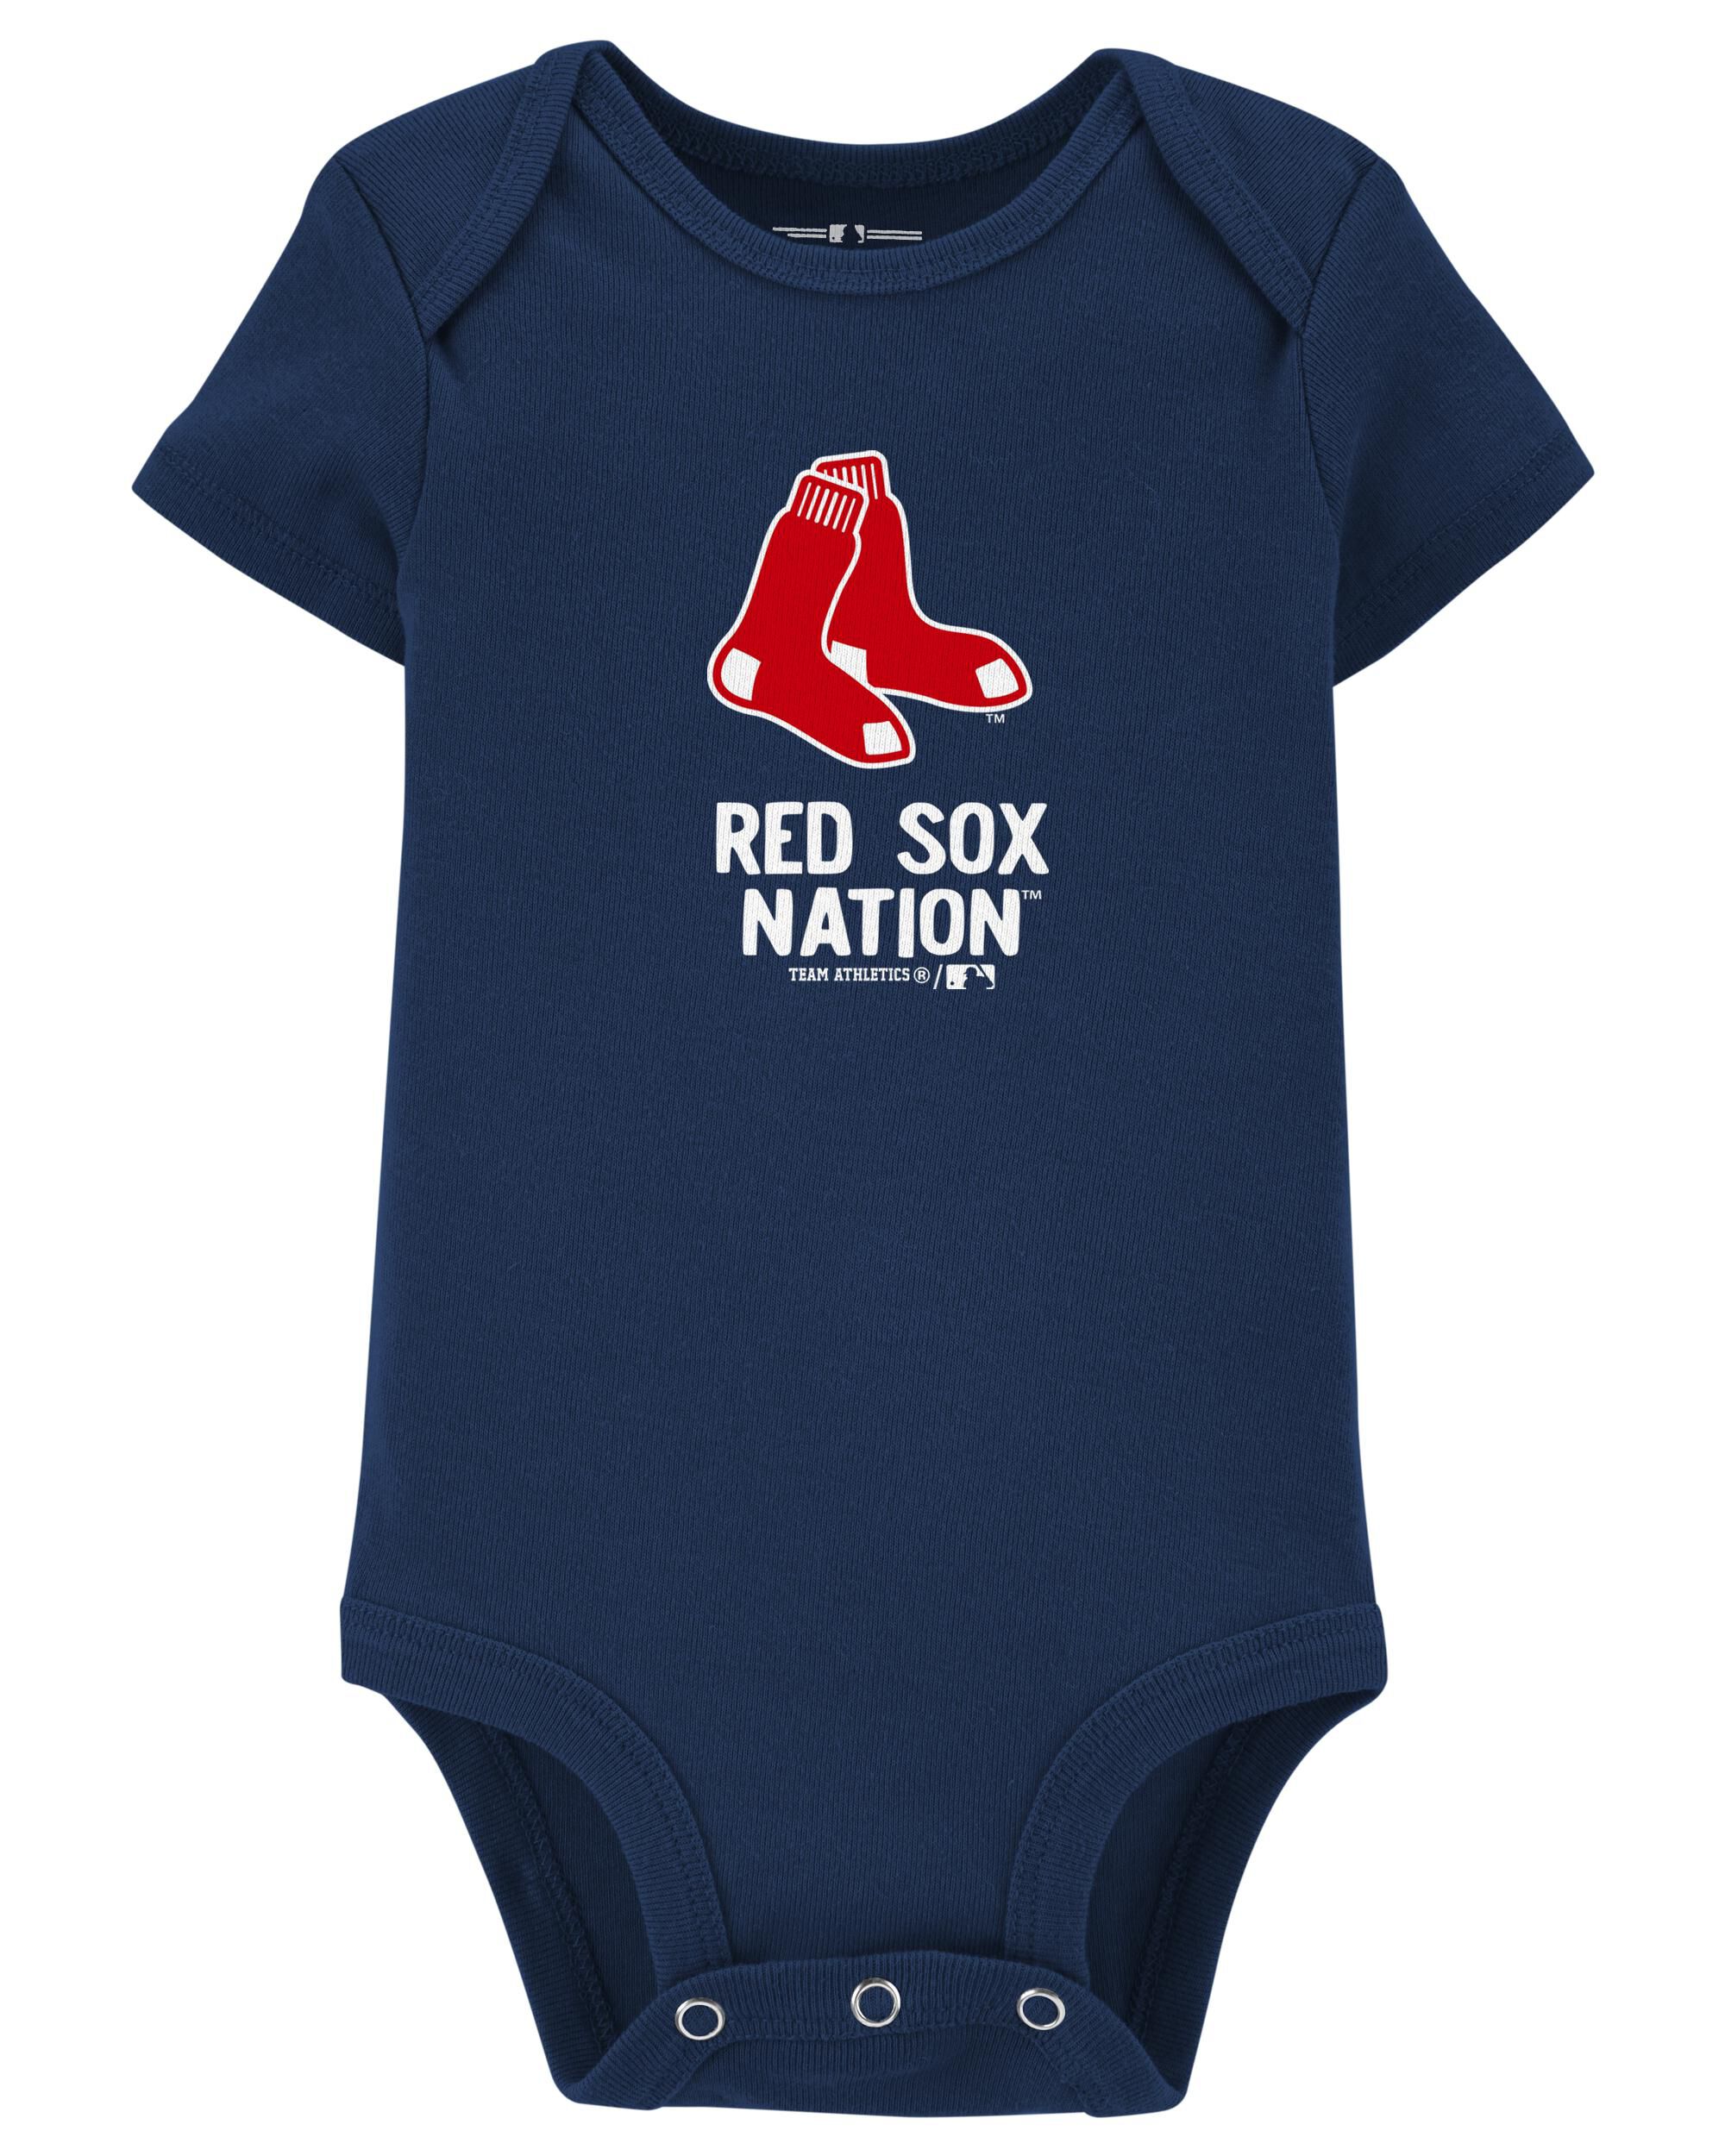 Boston Red Sox Onesie Bodysuit Shirt Shower Gift Newest Member Sox Nation 